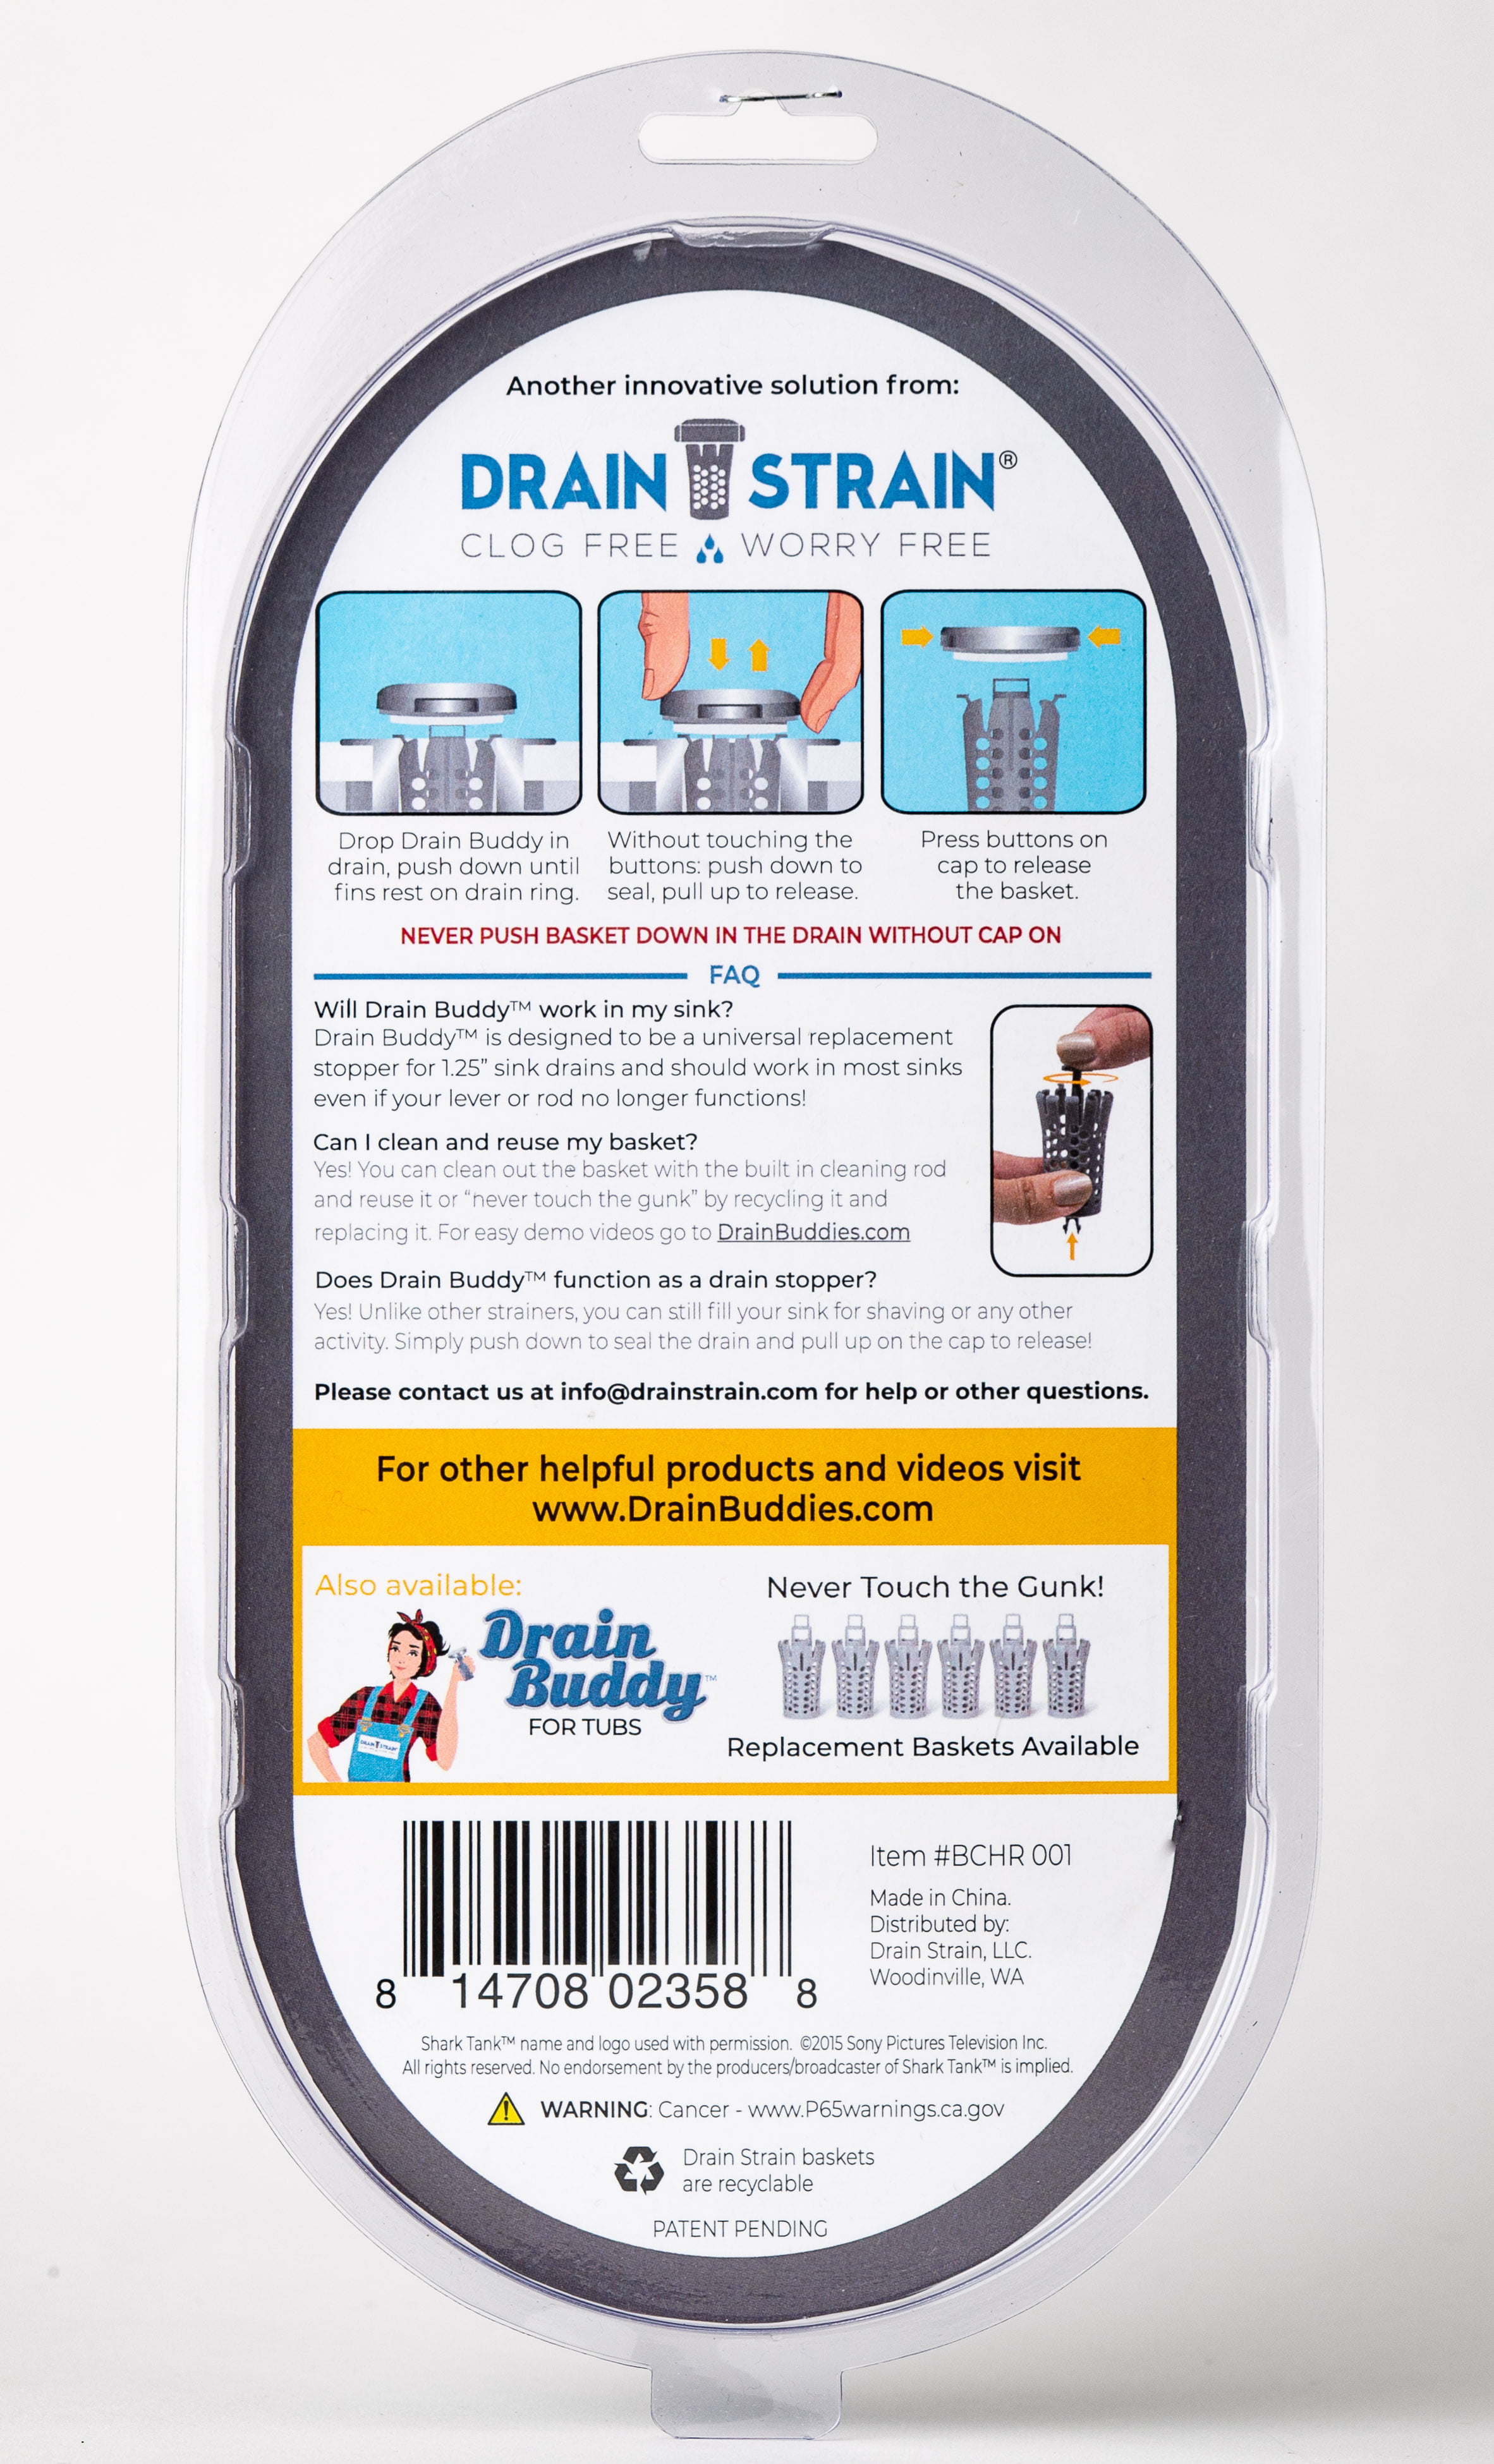 Drain Buddy: Bathroom Hair Catcher & Sink Stopper Solutions